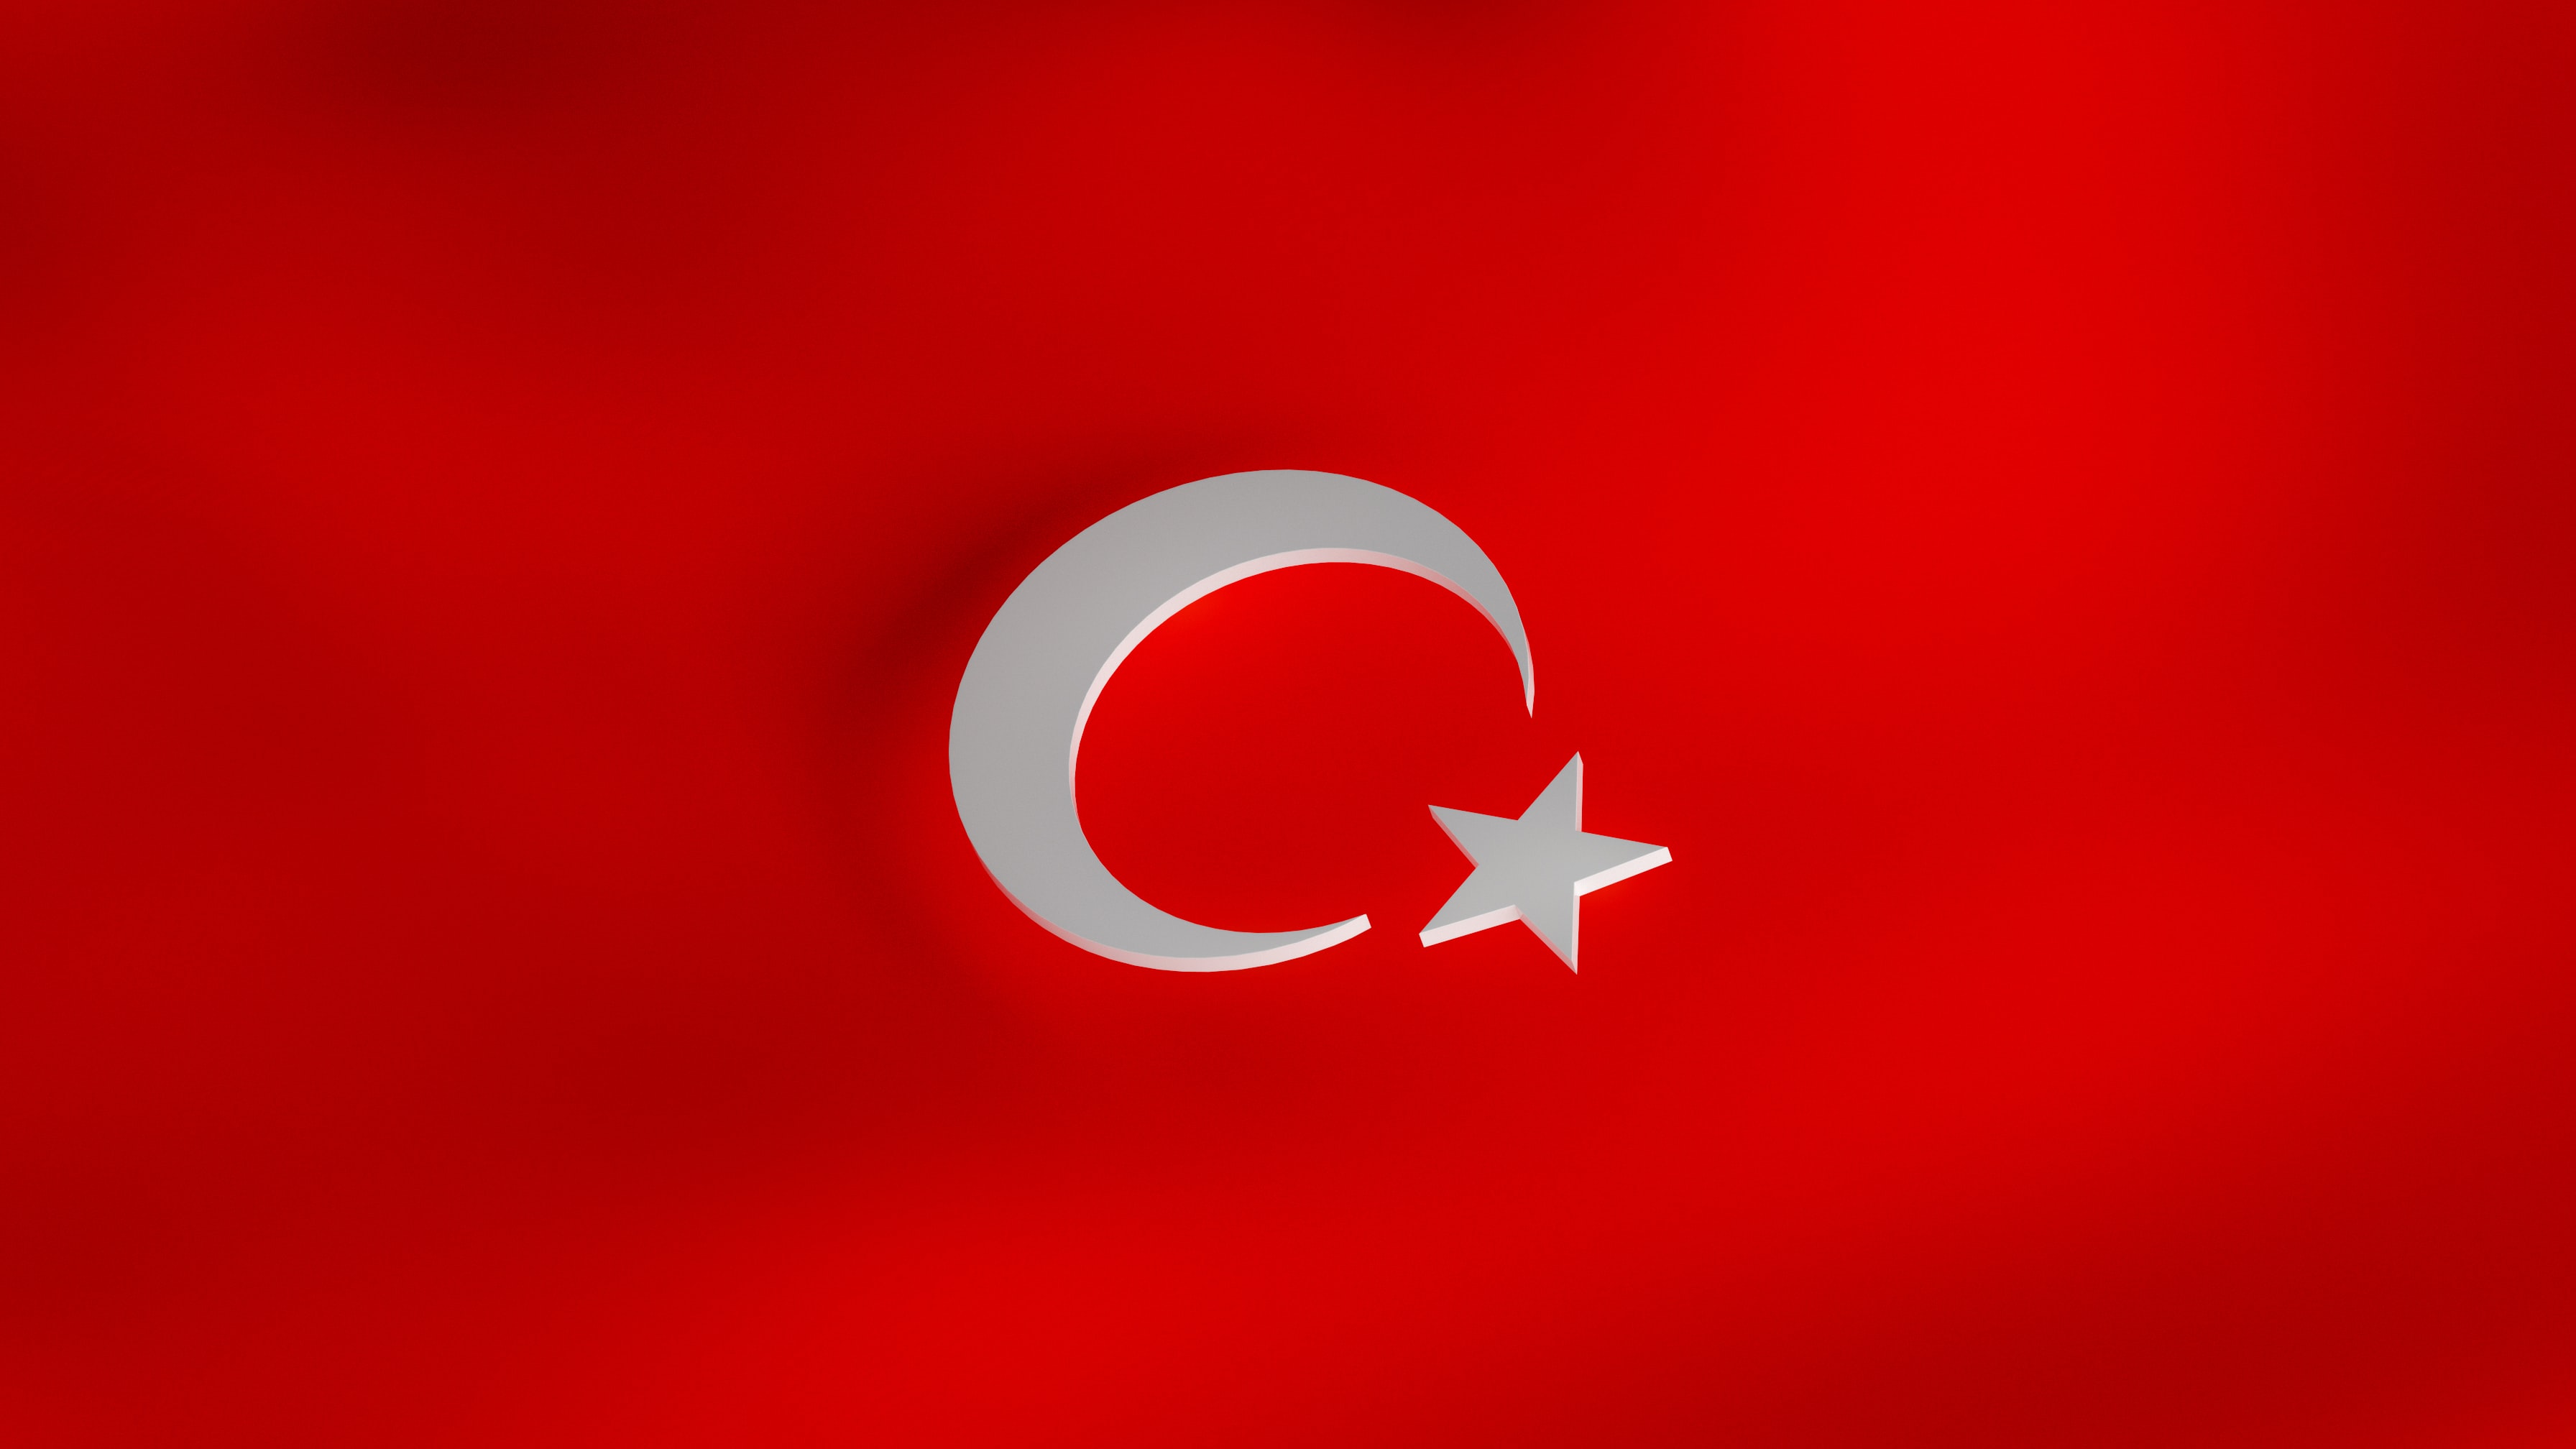 Cavusoglu assures Turkey will continue to make ECO "more effective"